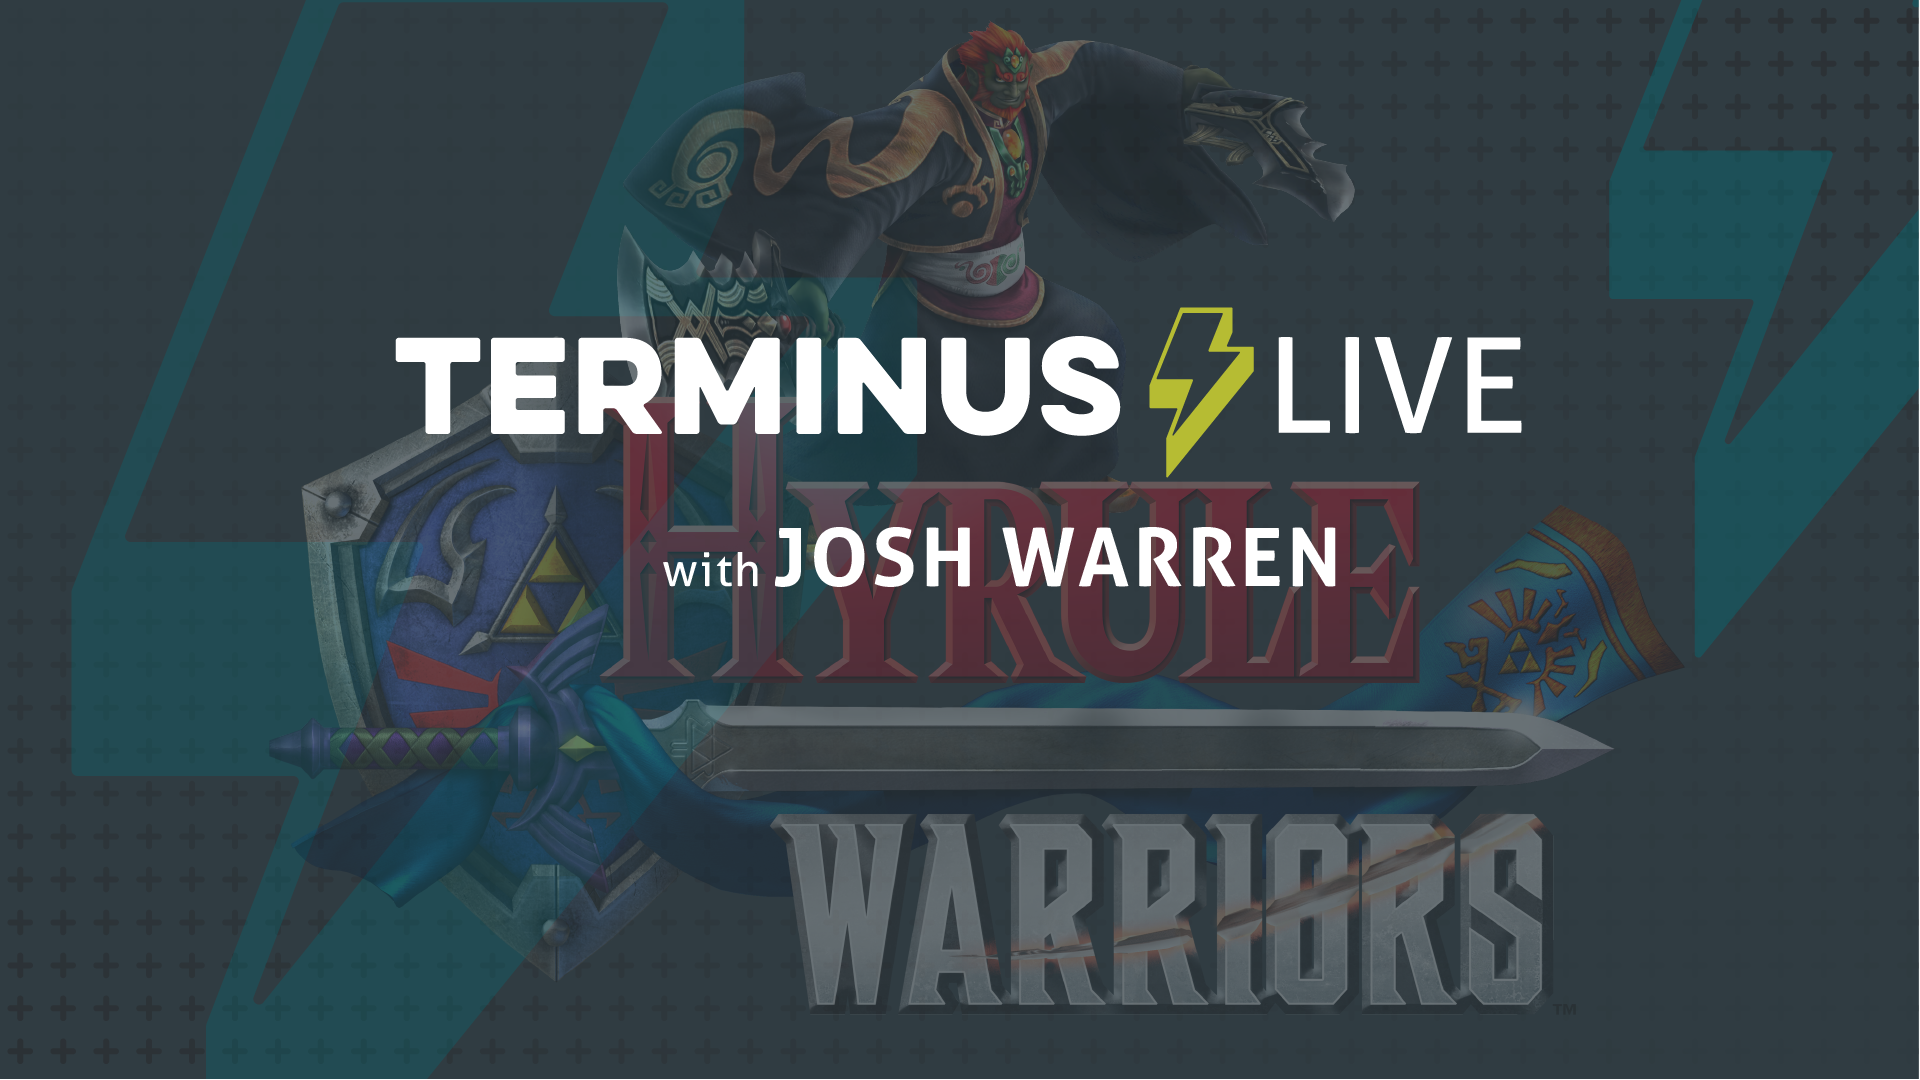 TERMINUS Live: Josh Warren plays Hyrule Warriors